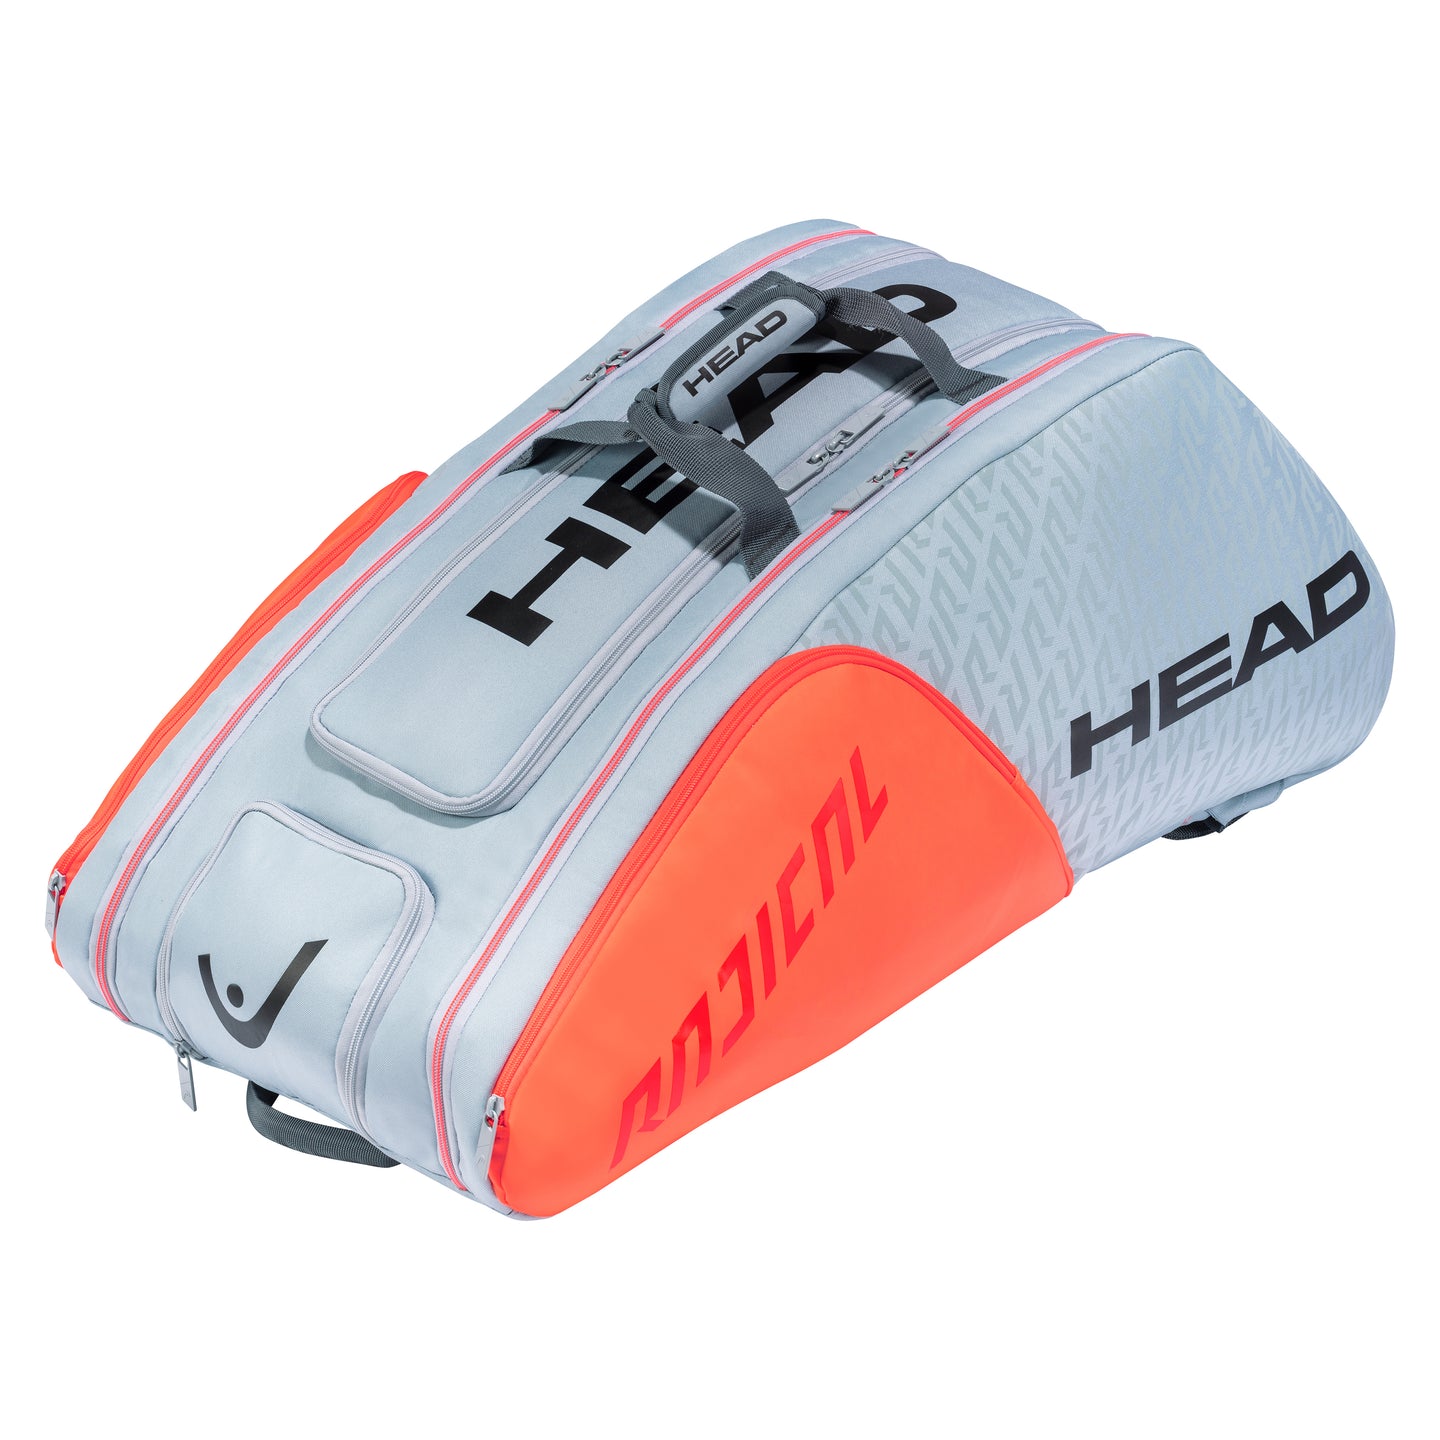 HEAD RADICAL MONSTER COMBI TENNIS BAG